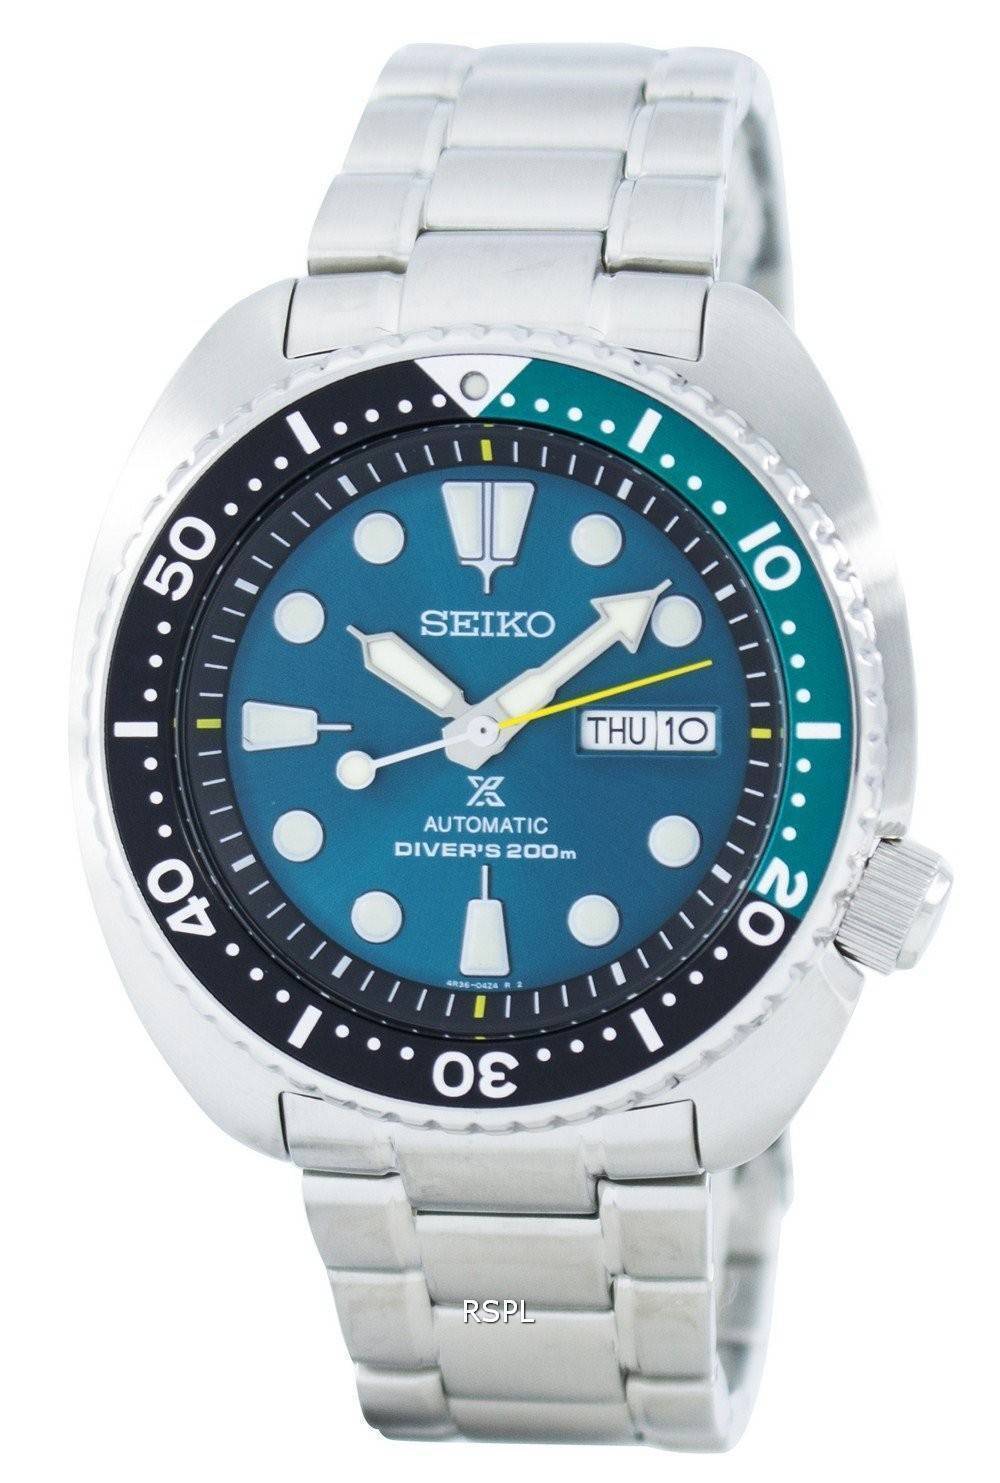 Seiko Prospex Automatic Diver's 200M Limited Edition SRPB01 SRPB01K1 ...